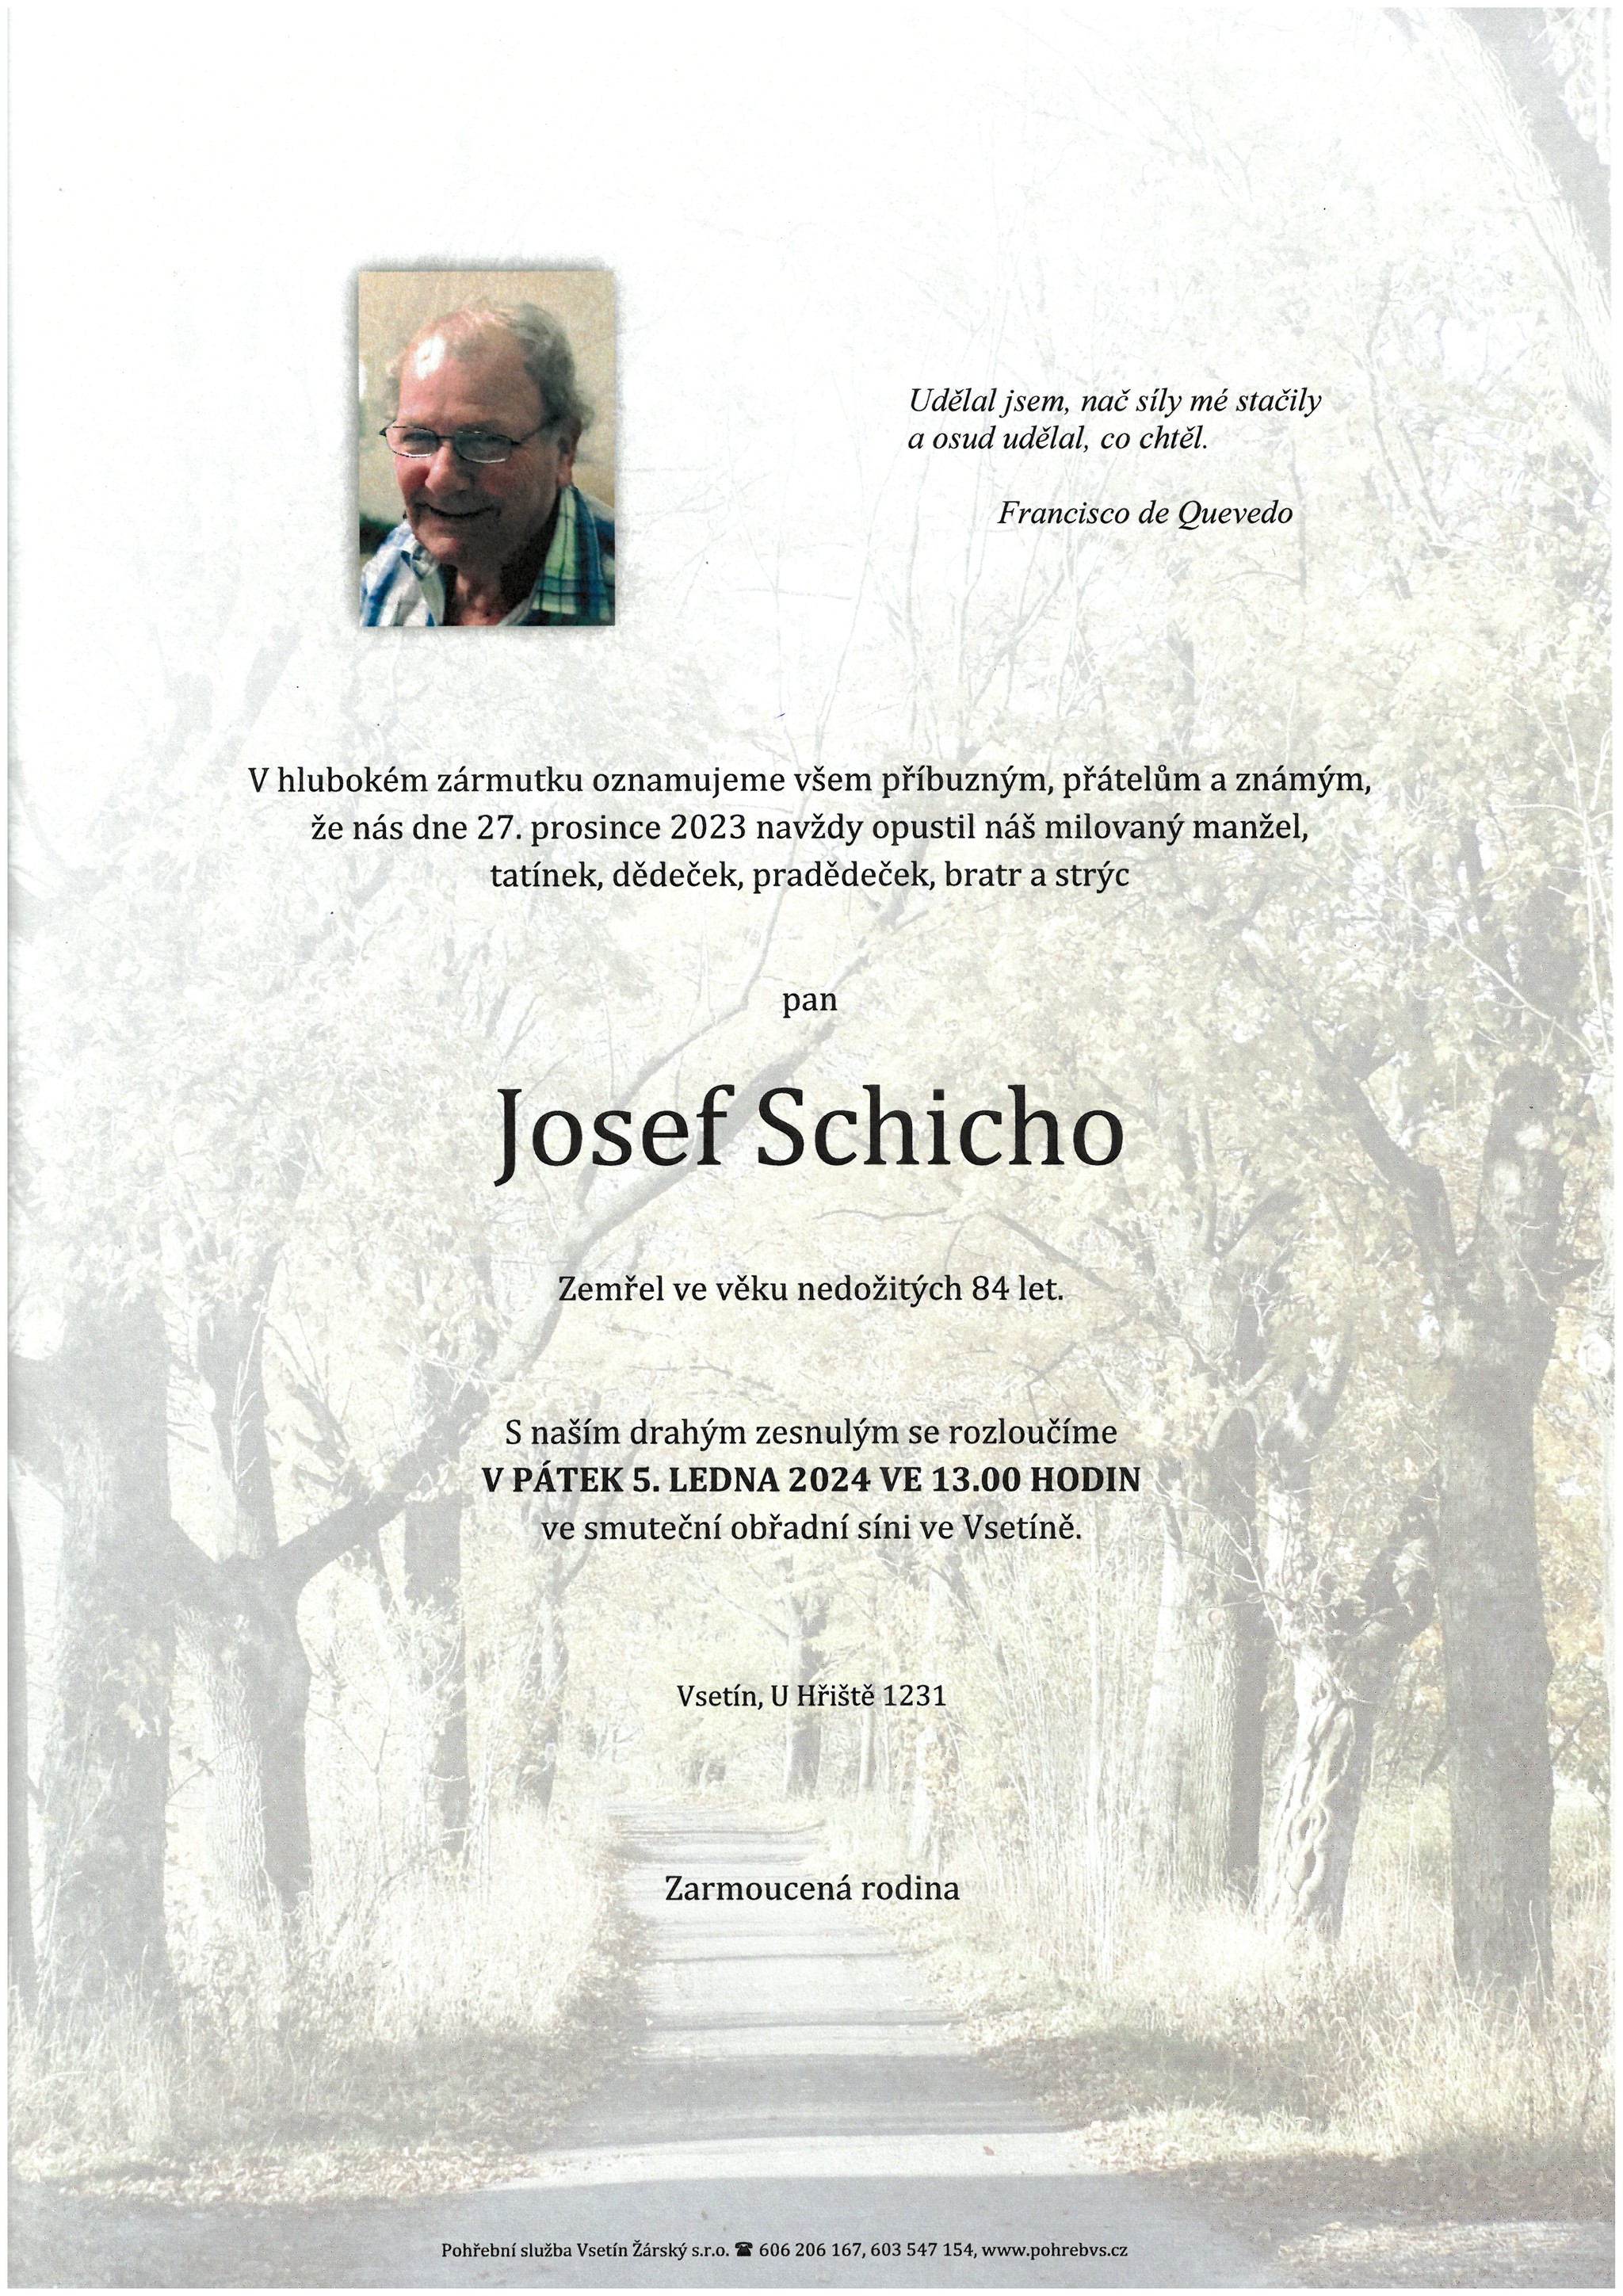 Josef Schicho